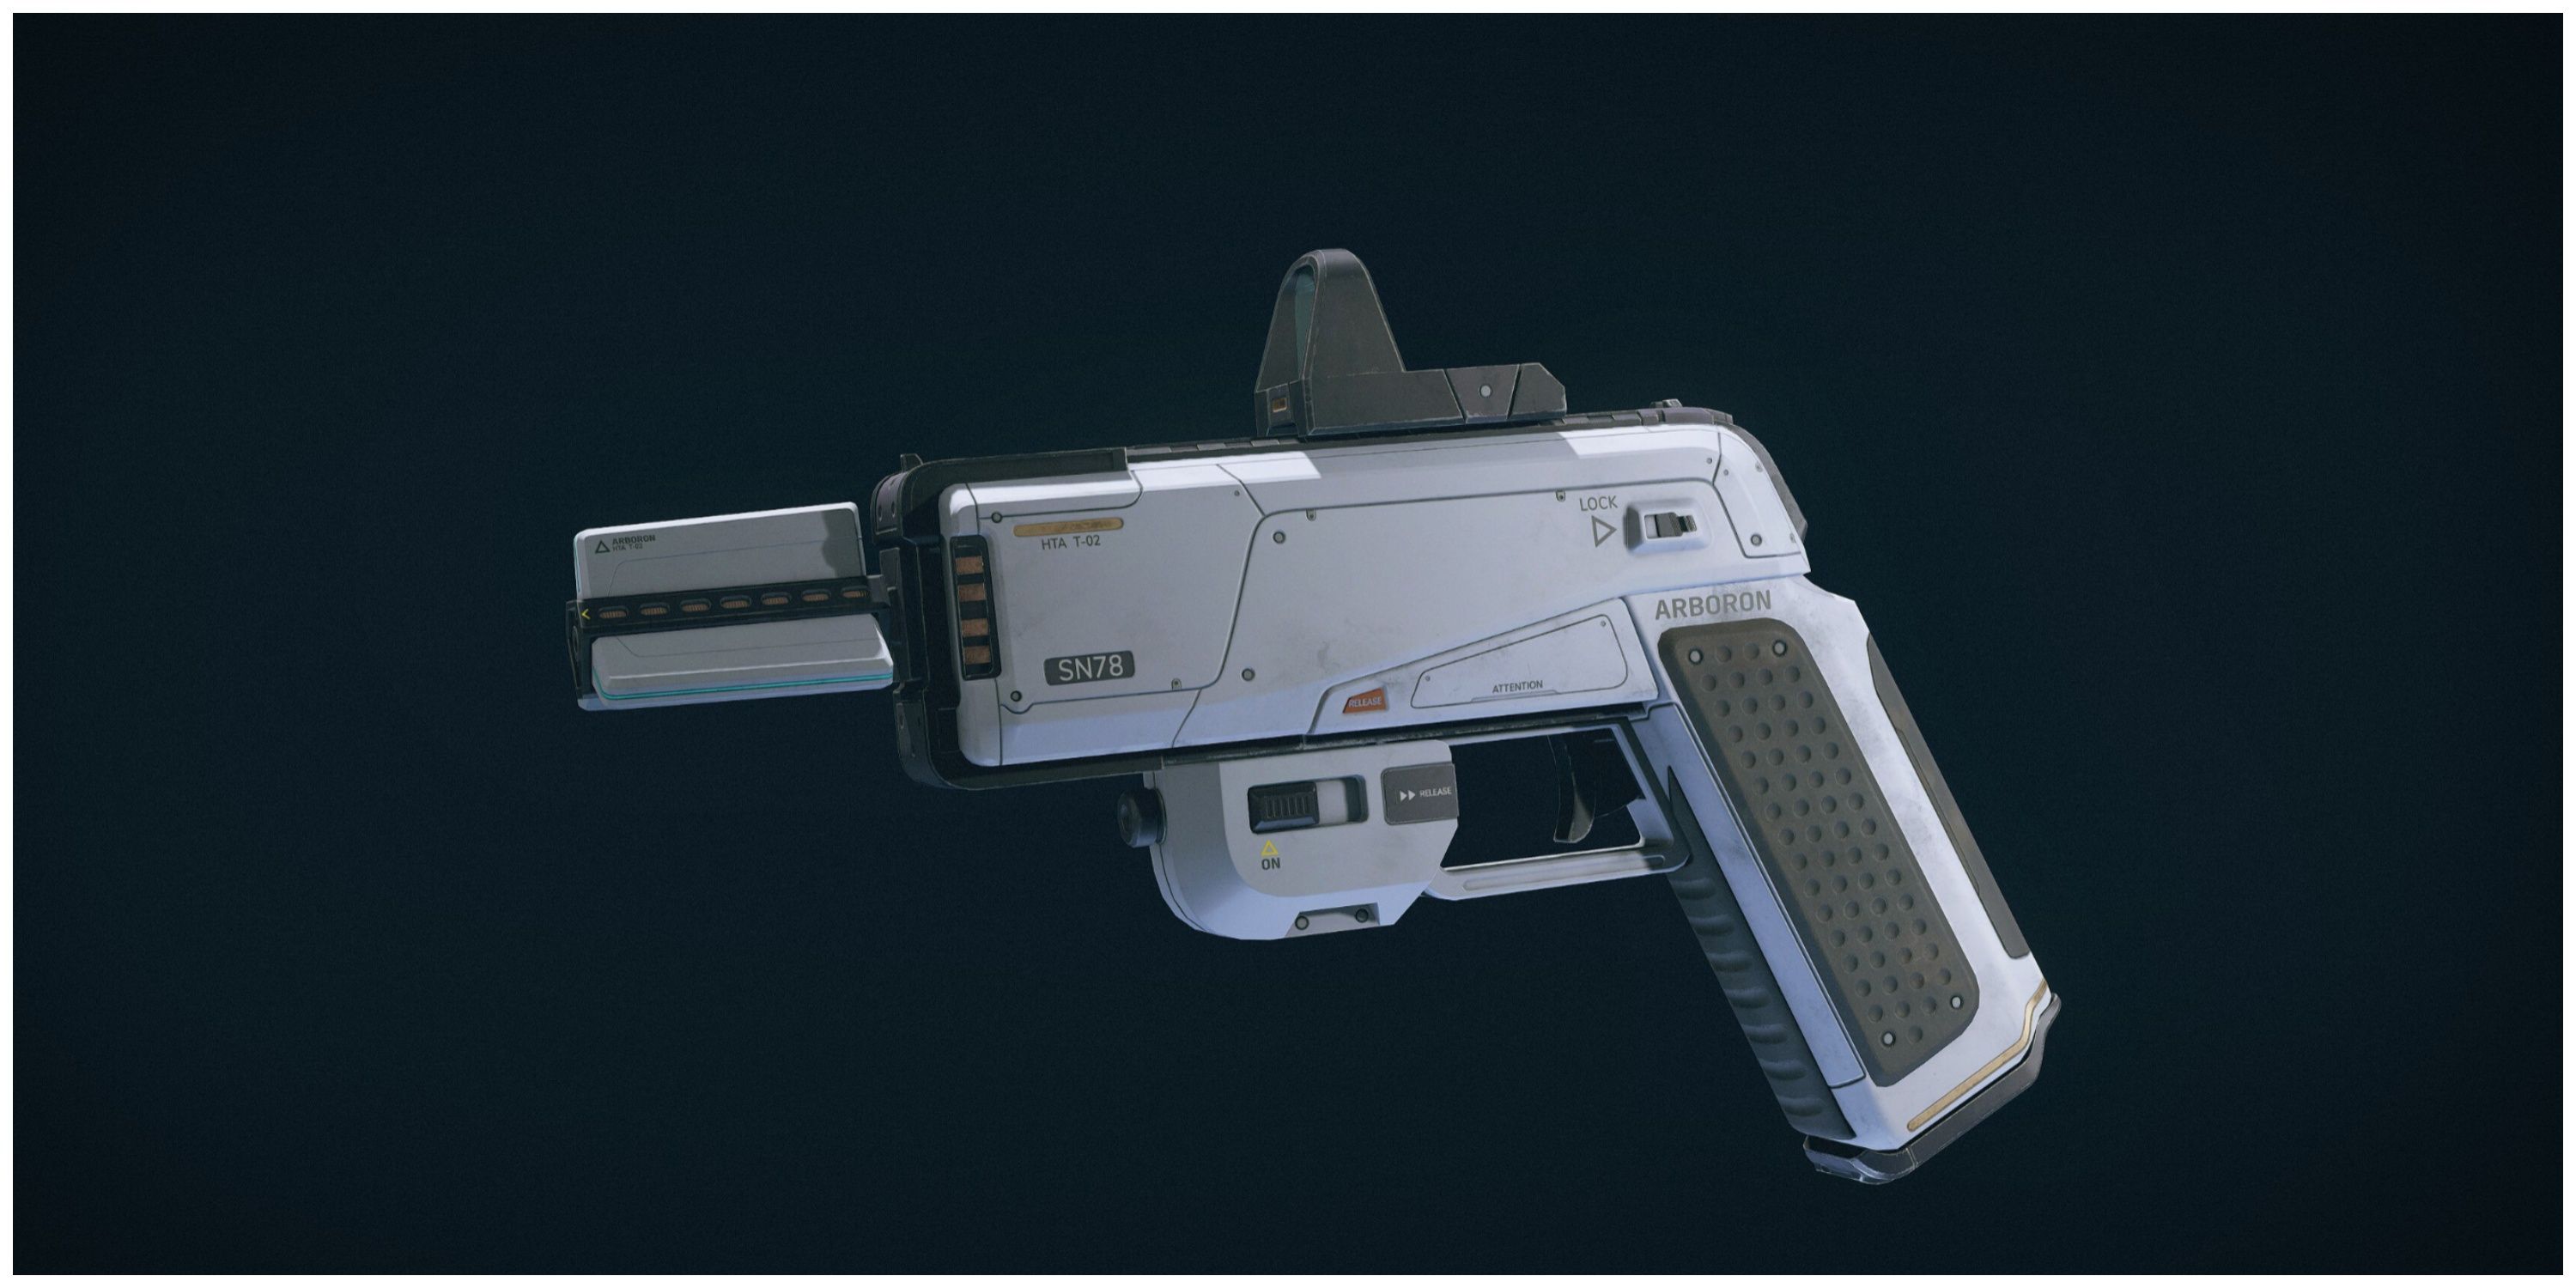 particle beam pistol in starfield